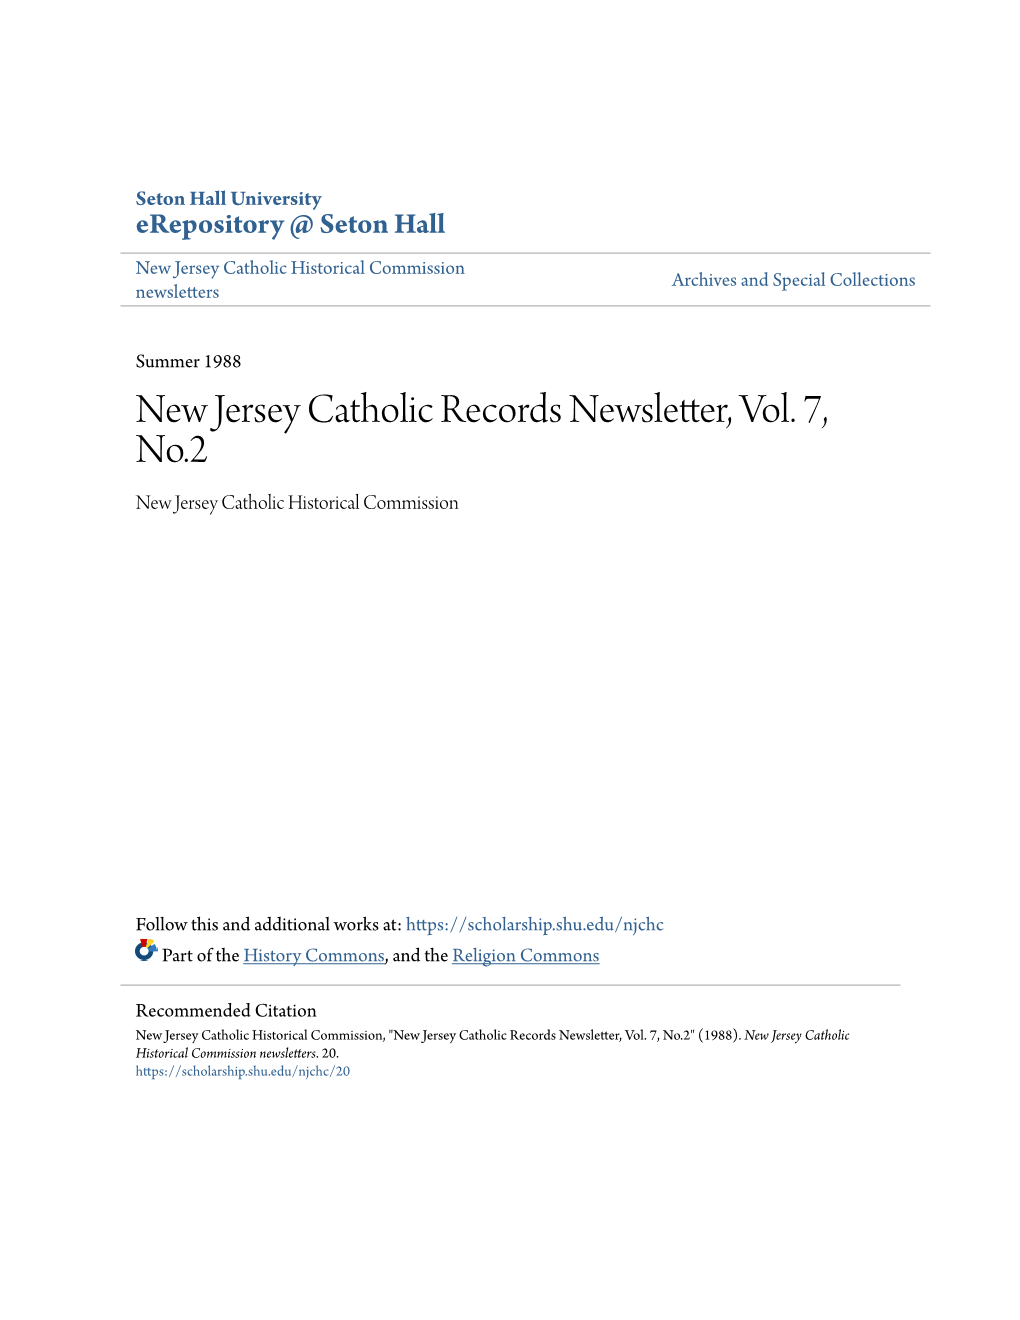 New Jersey Catholic Records Newsletter, Vol. 7, No.2 New Jersey Catholic Historical Commission